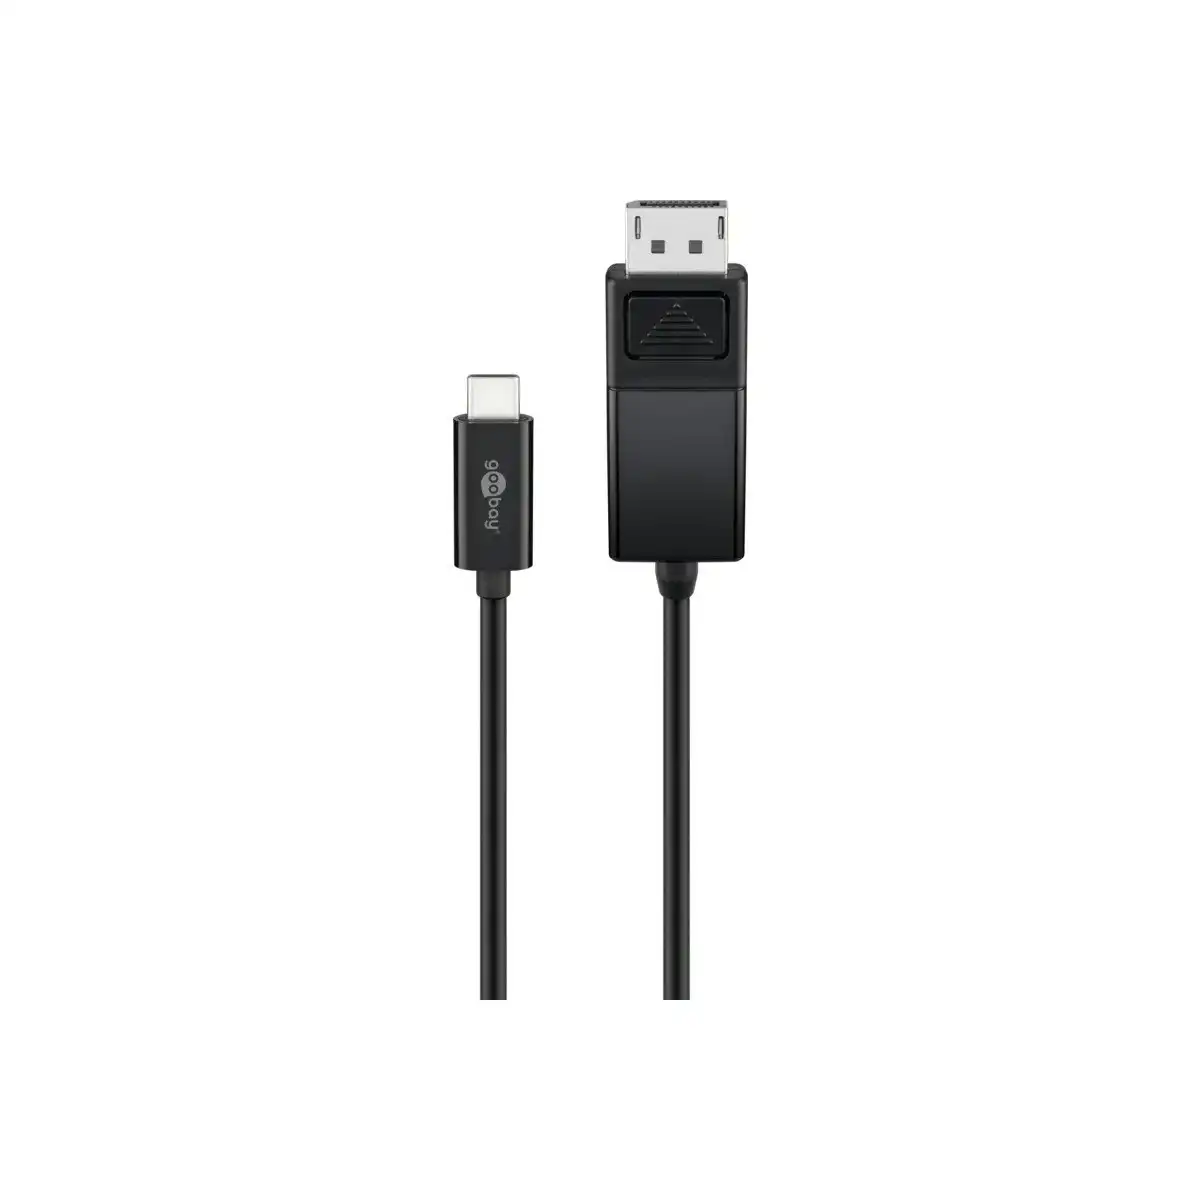 Goobay USB-C- DispPort adapt cable (4k 60 Hz) black  1.20m